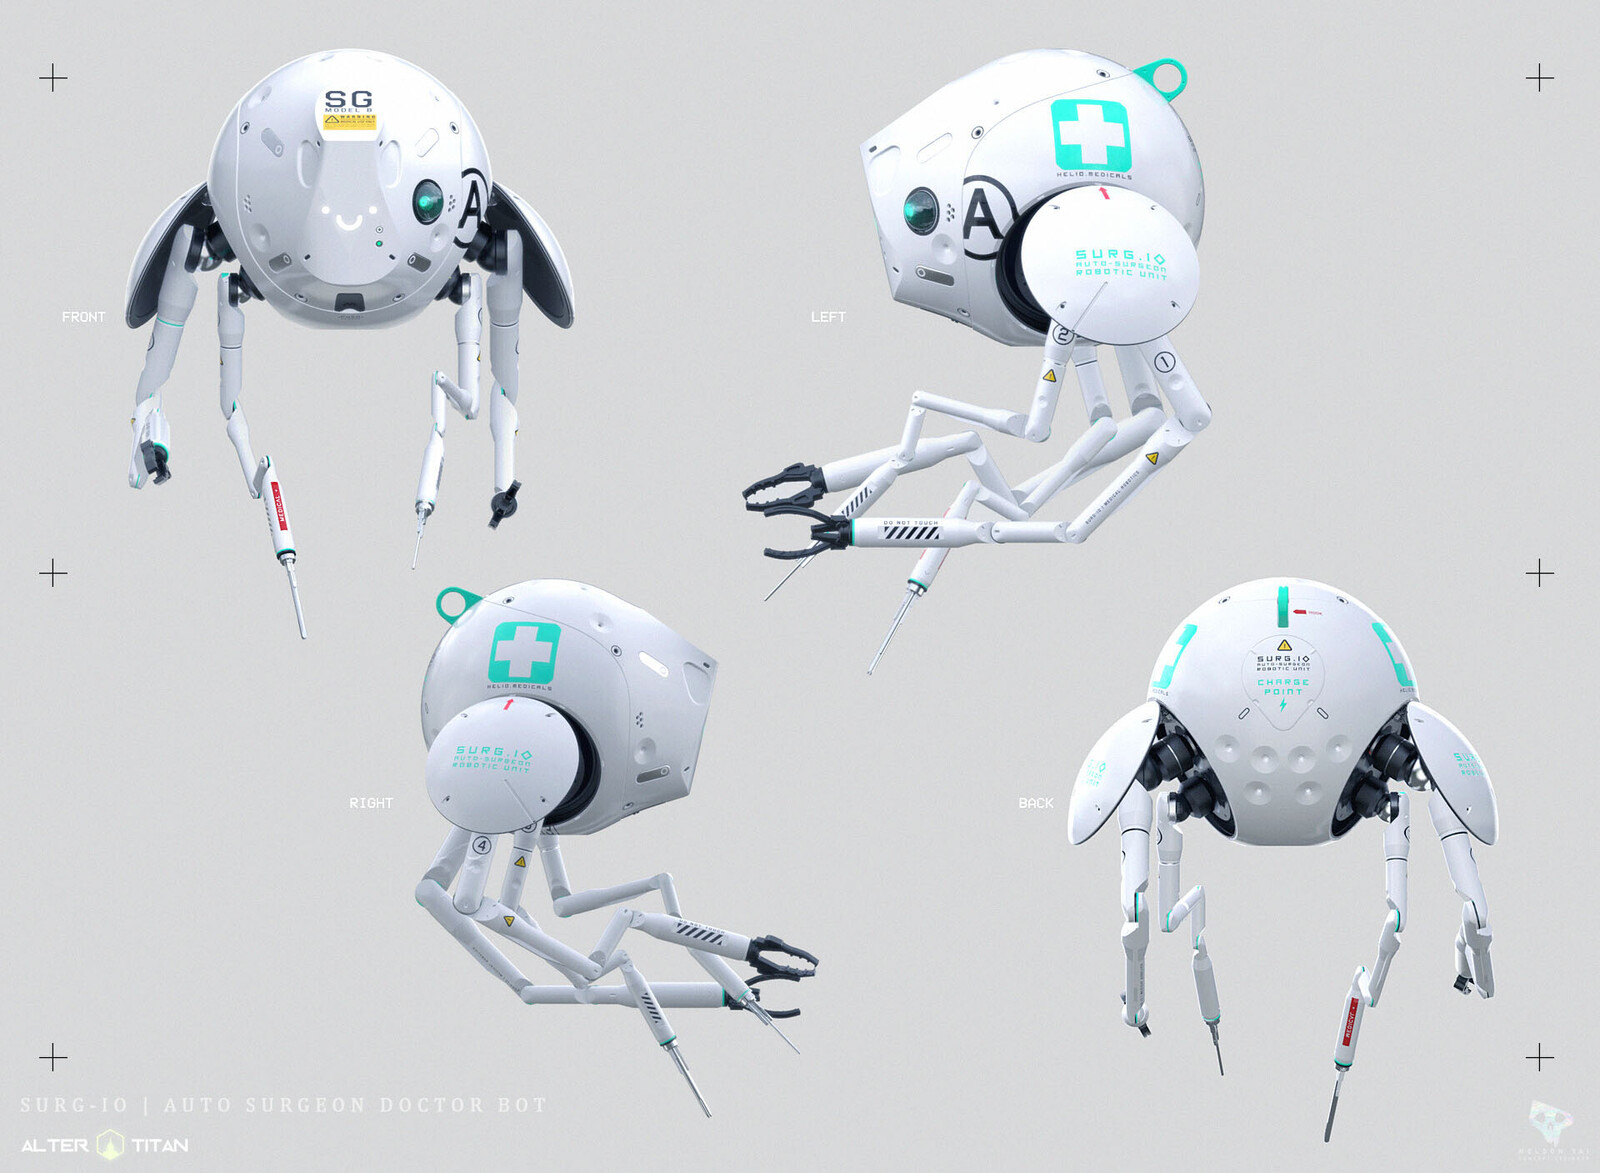 Nelson Tai - Concept Art & Design - Helmets, Crates, Hoverboard, Droids ...